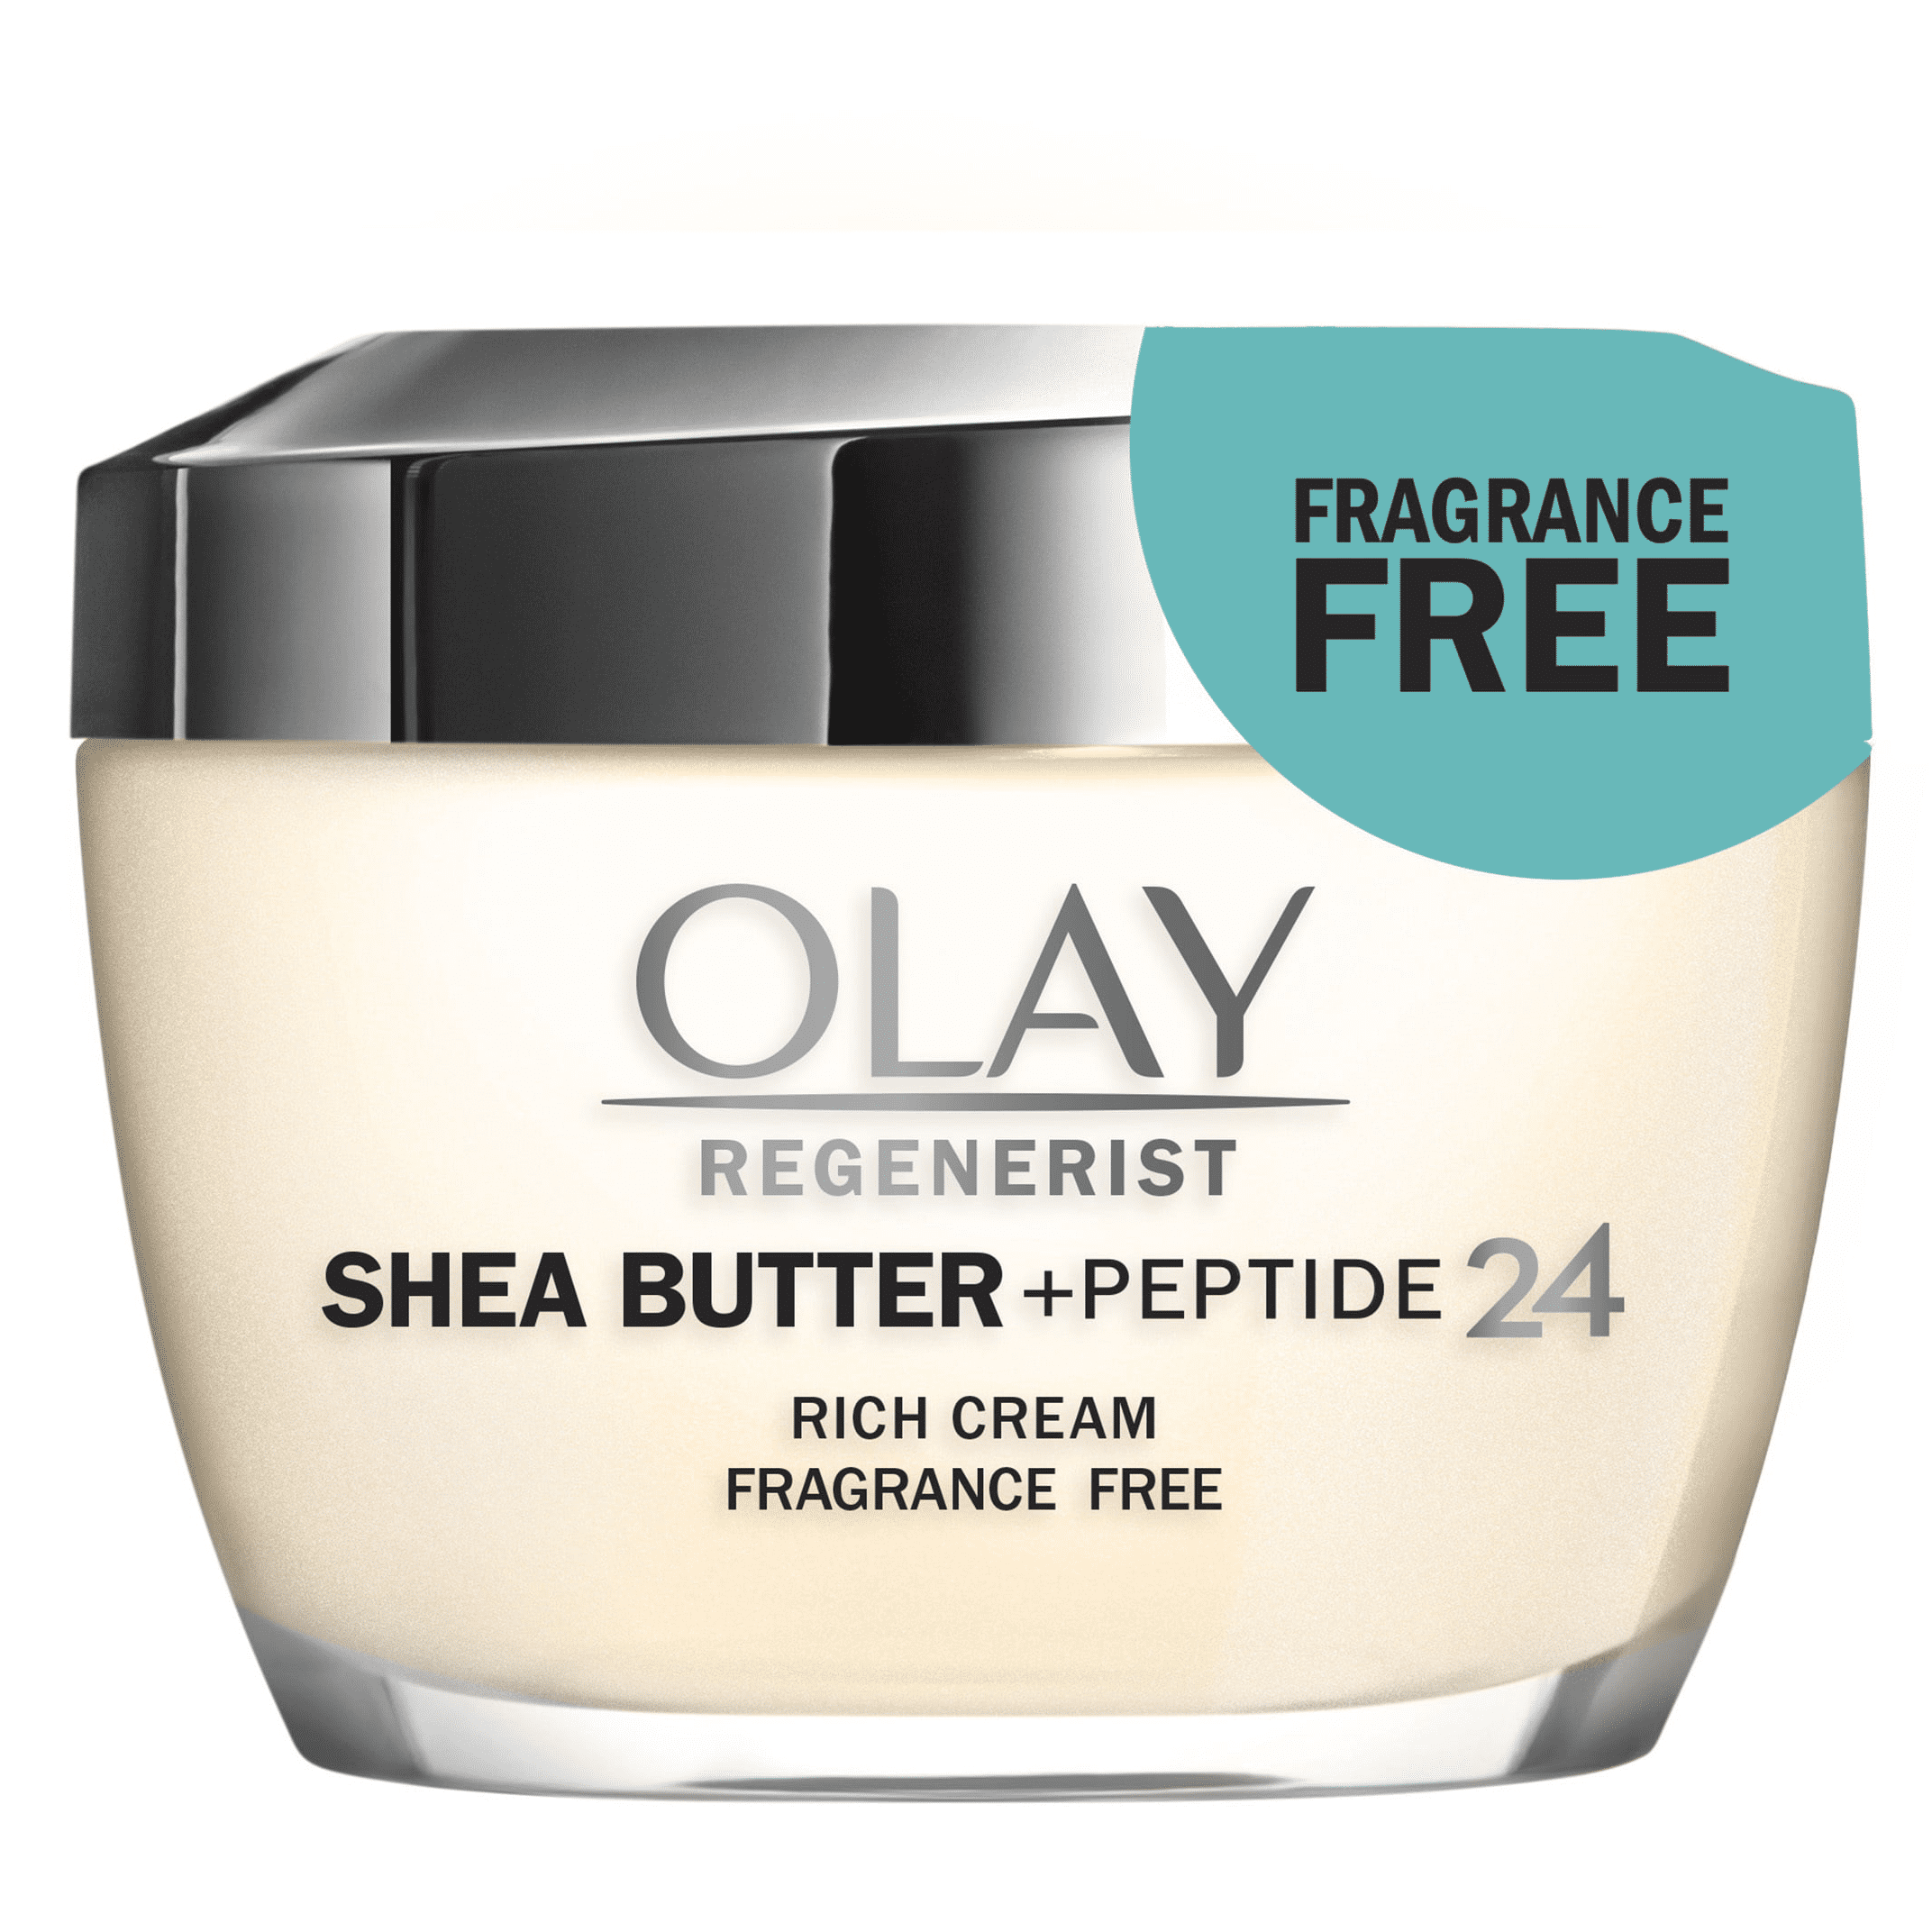 Olay Regenerist Moisturizer with Shea Butter, Fragrance-Free, 1.7 oz